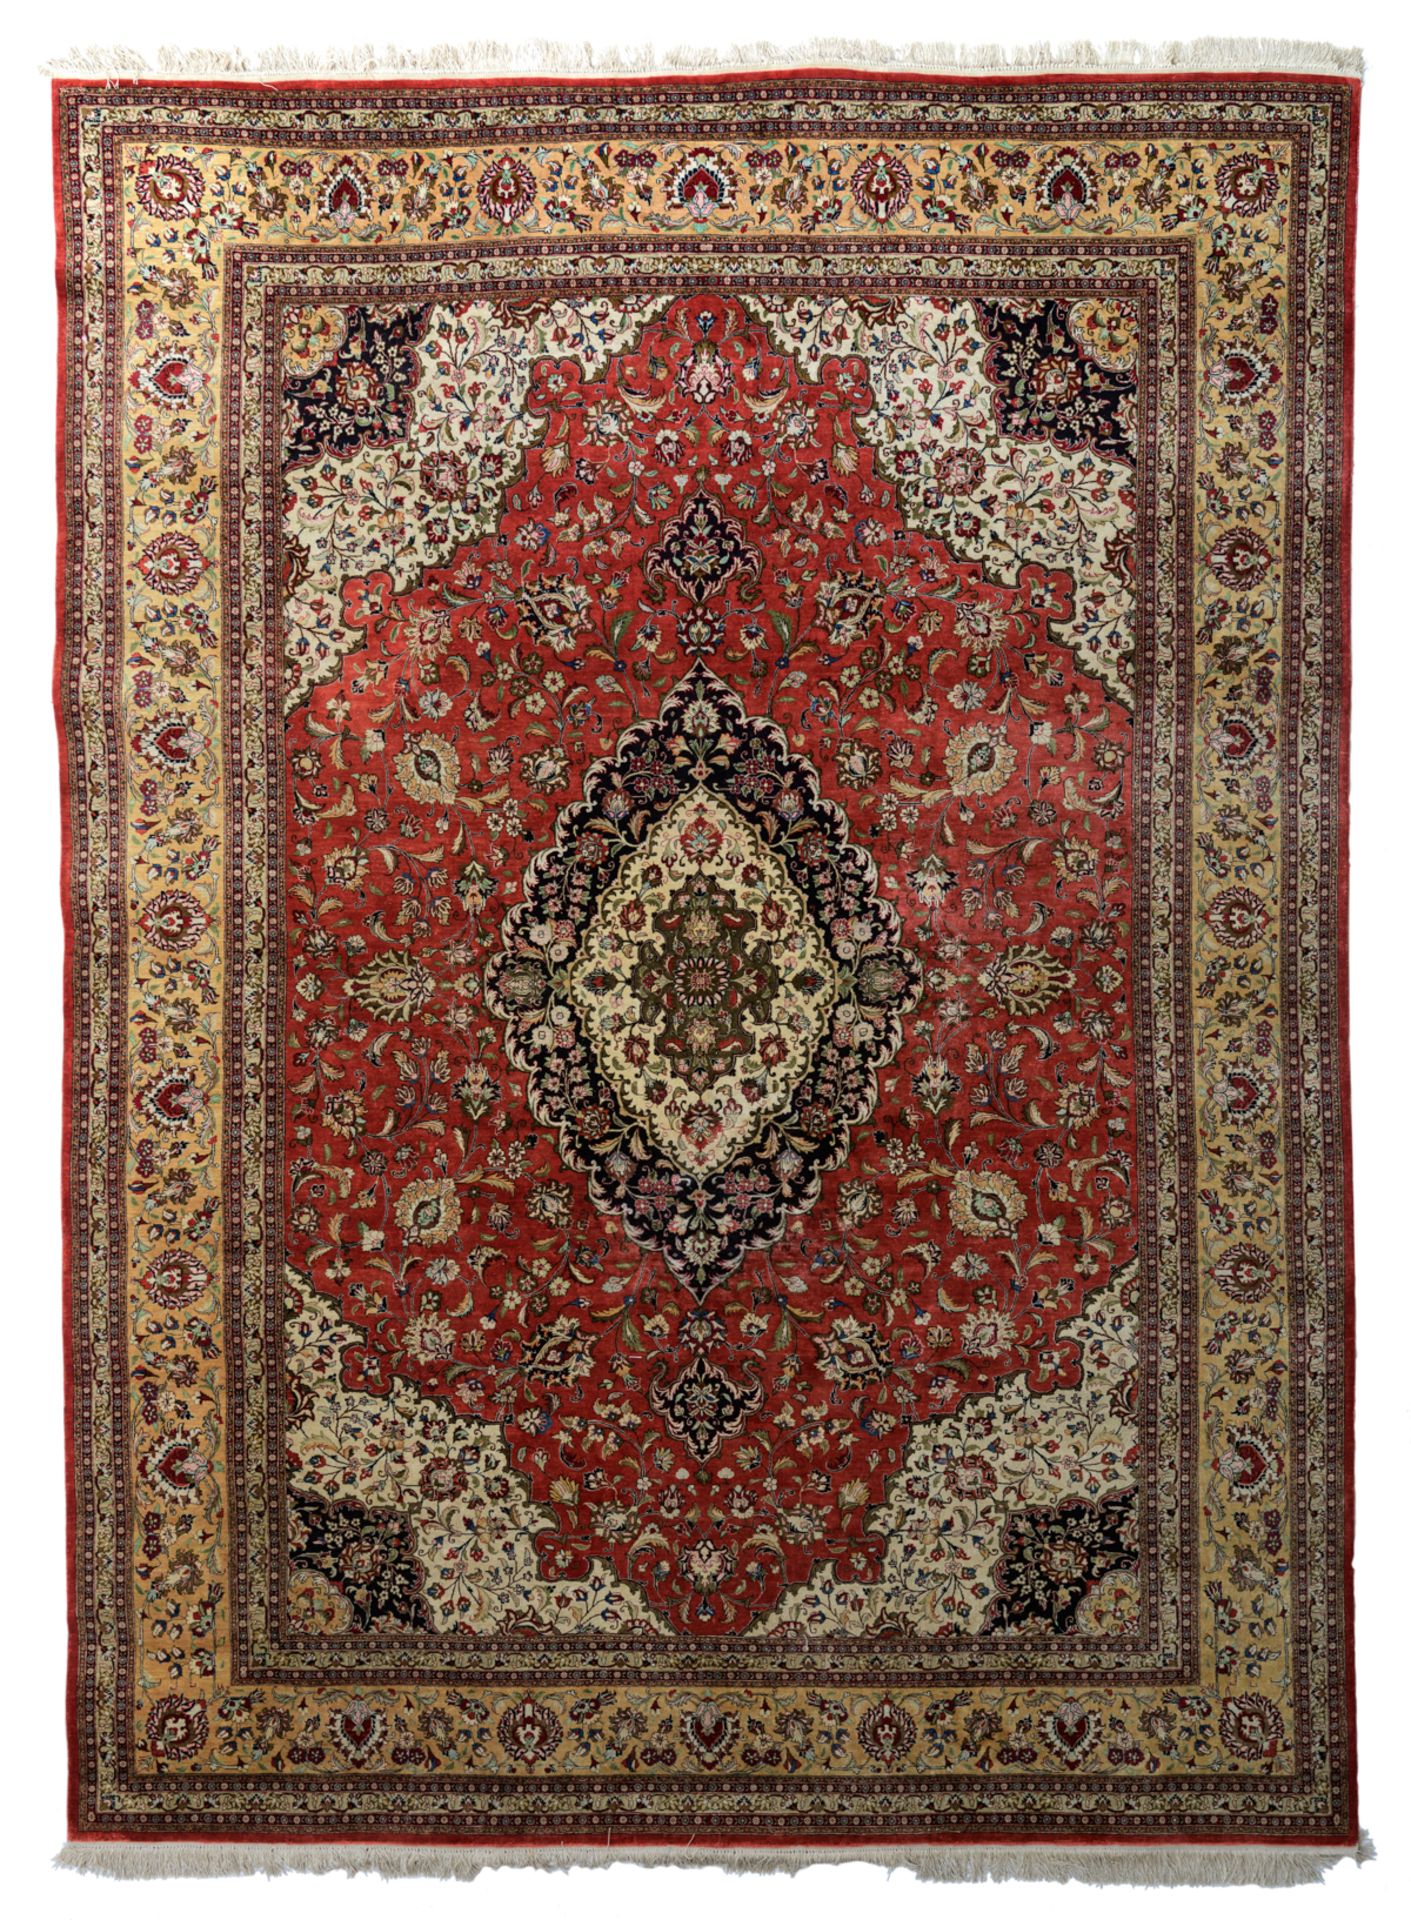 An Oriental woollen rug, floral decorated, 253 x 345 cm